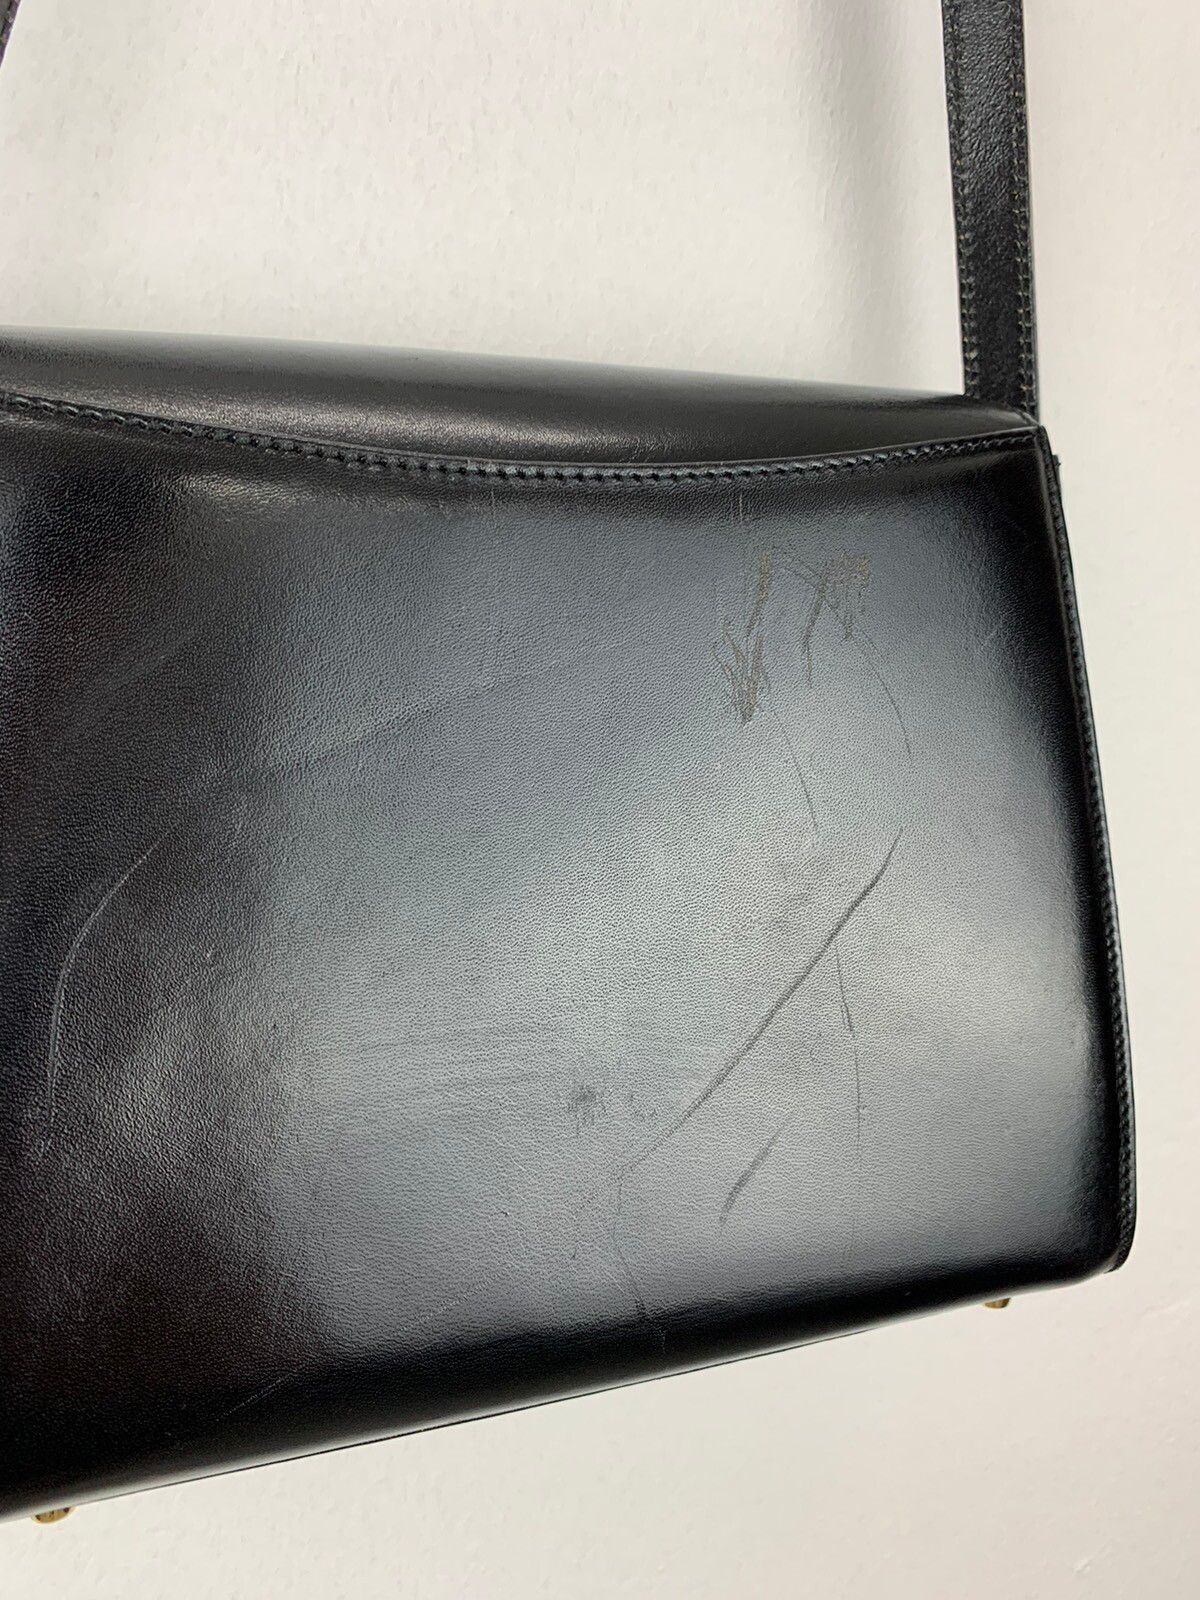 BALLY VINTAGE black leather hard shell bag antique bag Italy - 6